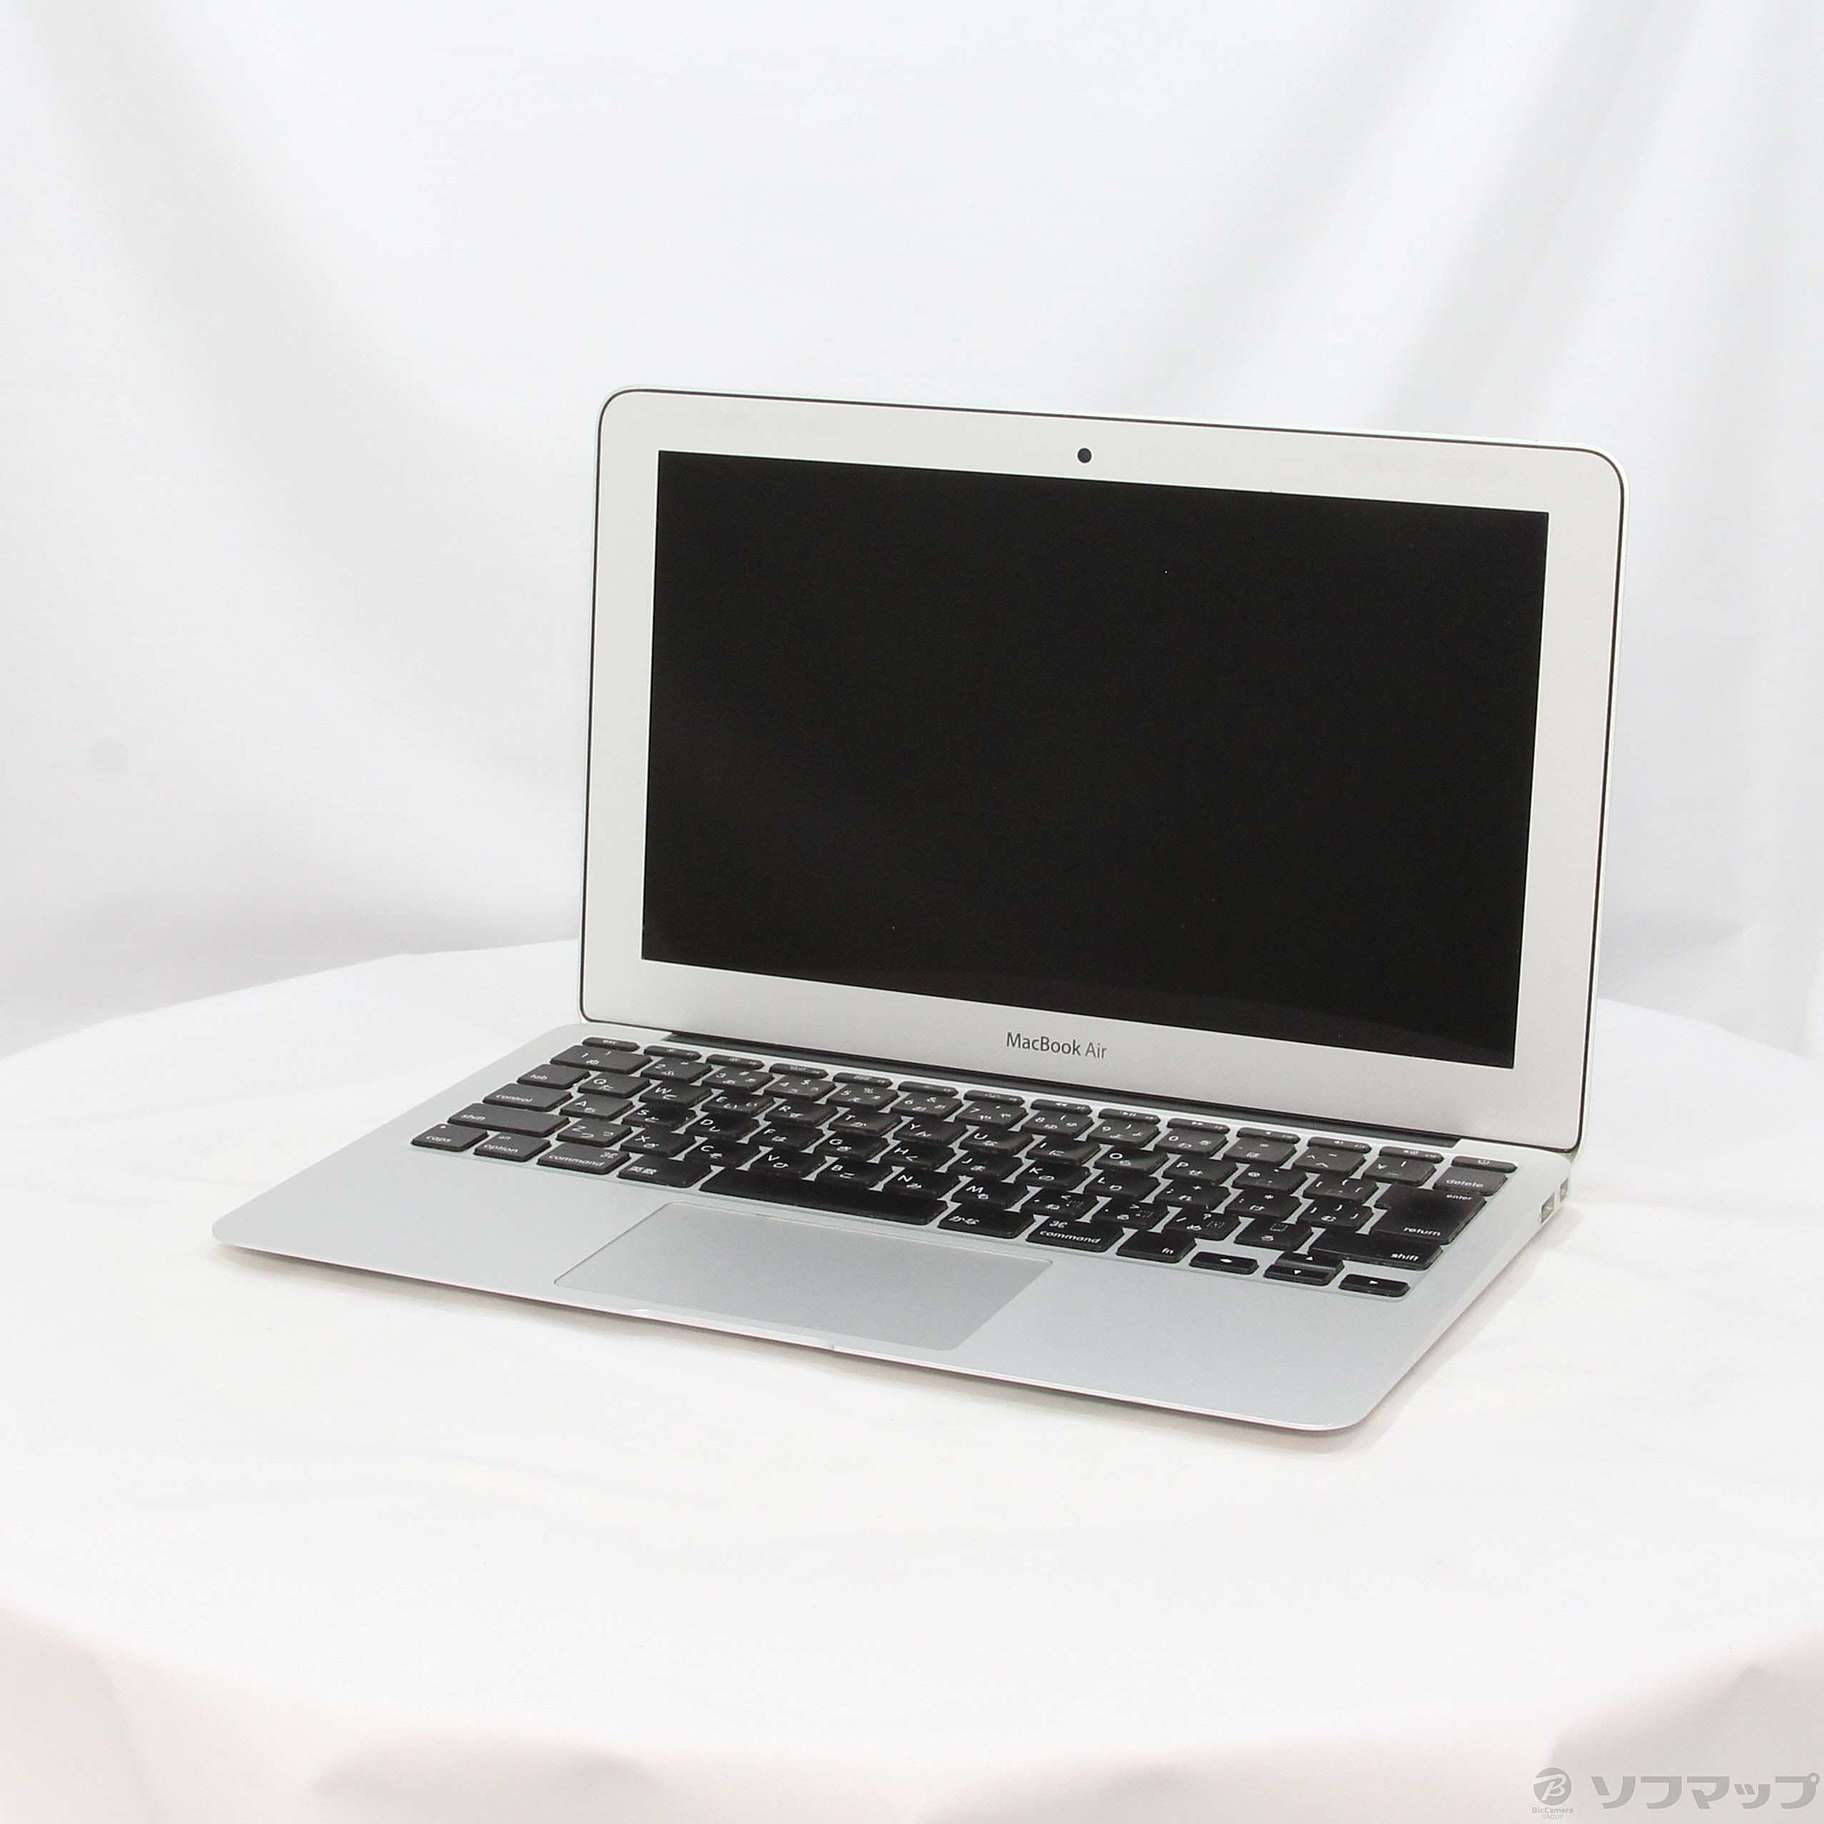 中古品(难有的)]MacBook Air 11.6-inch Mid 2013 MD712J/A Core_i5 1.3